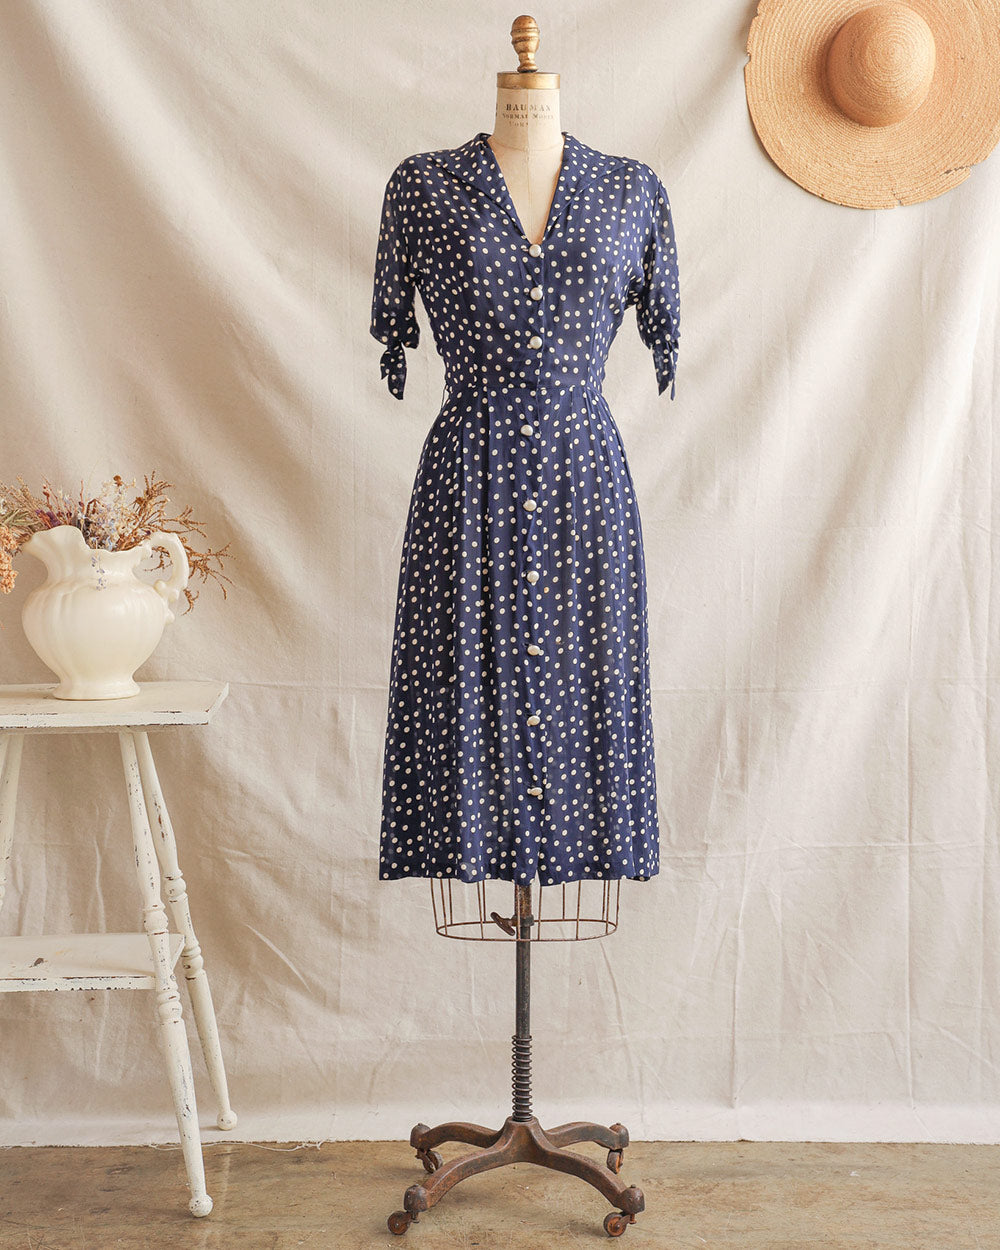 Shop Women's Vintage Clothing at Adored Vintage